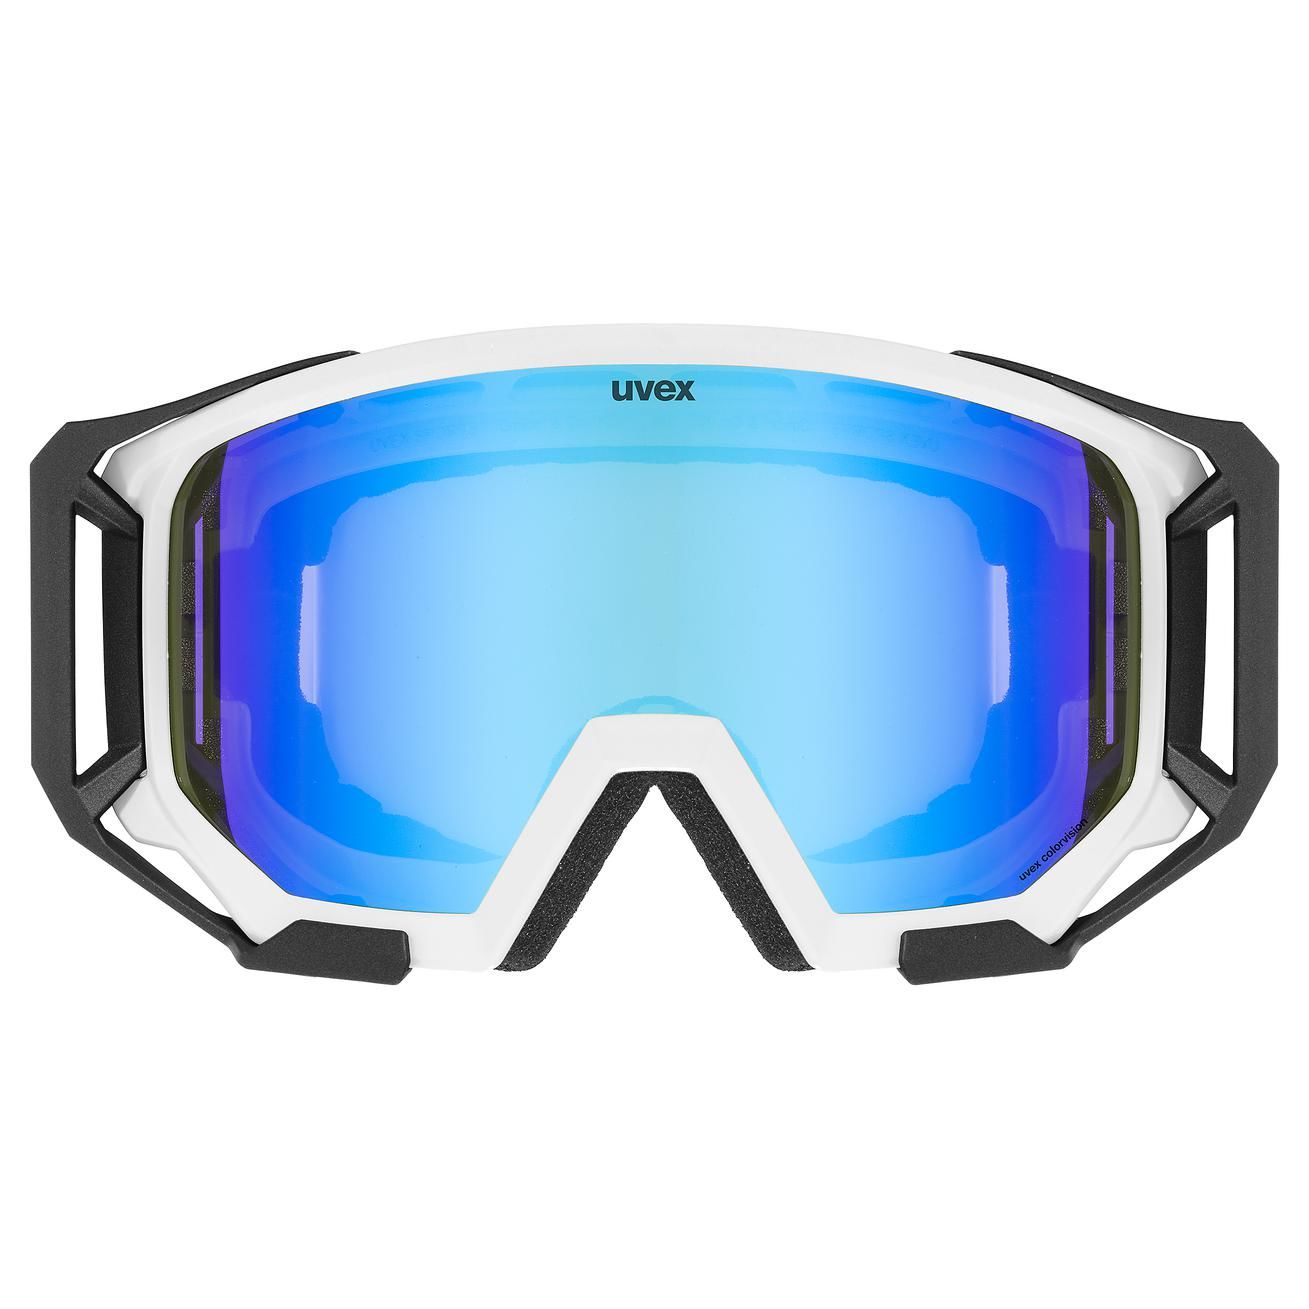 cyklistické okuliare uvex athletic CV black mat blue